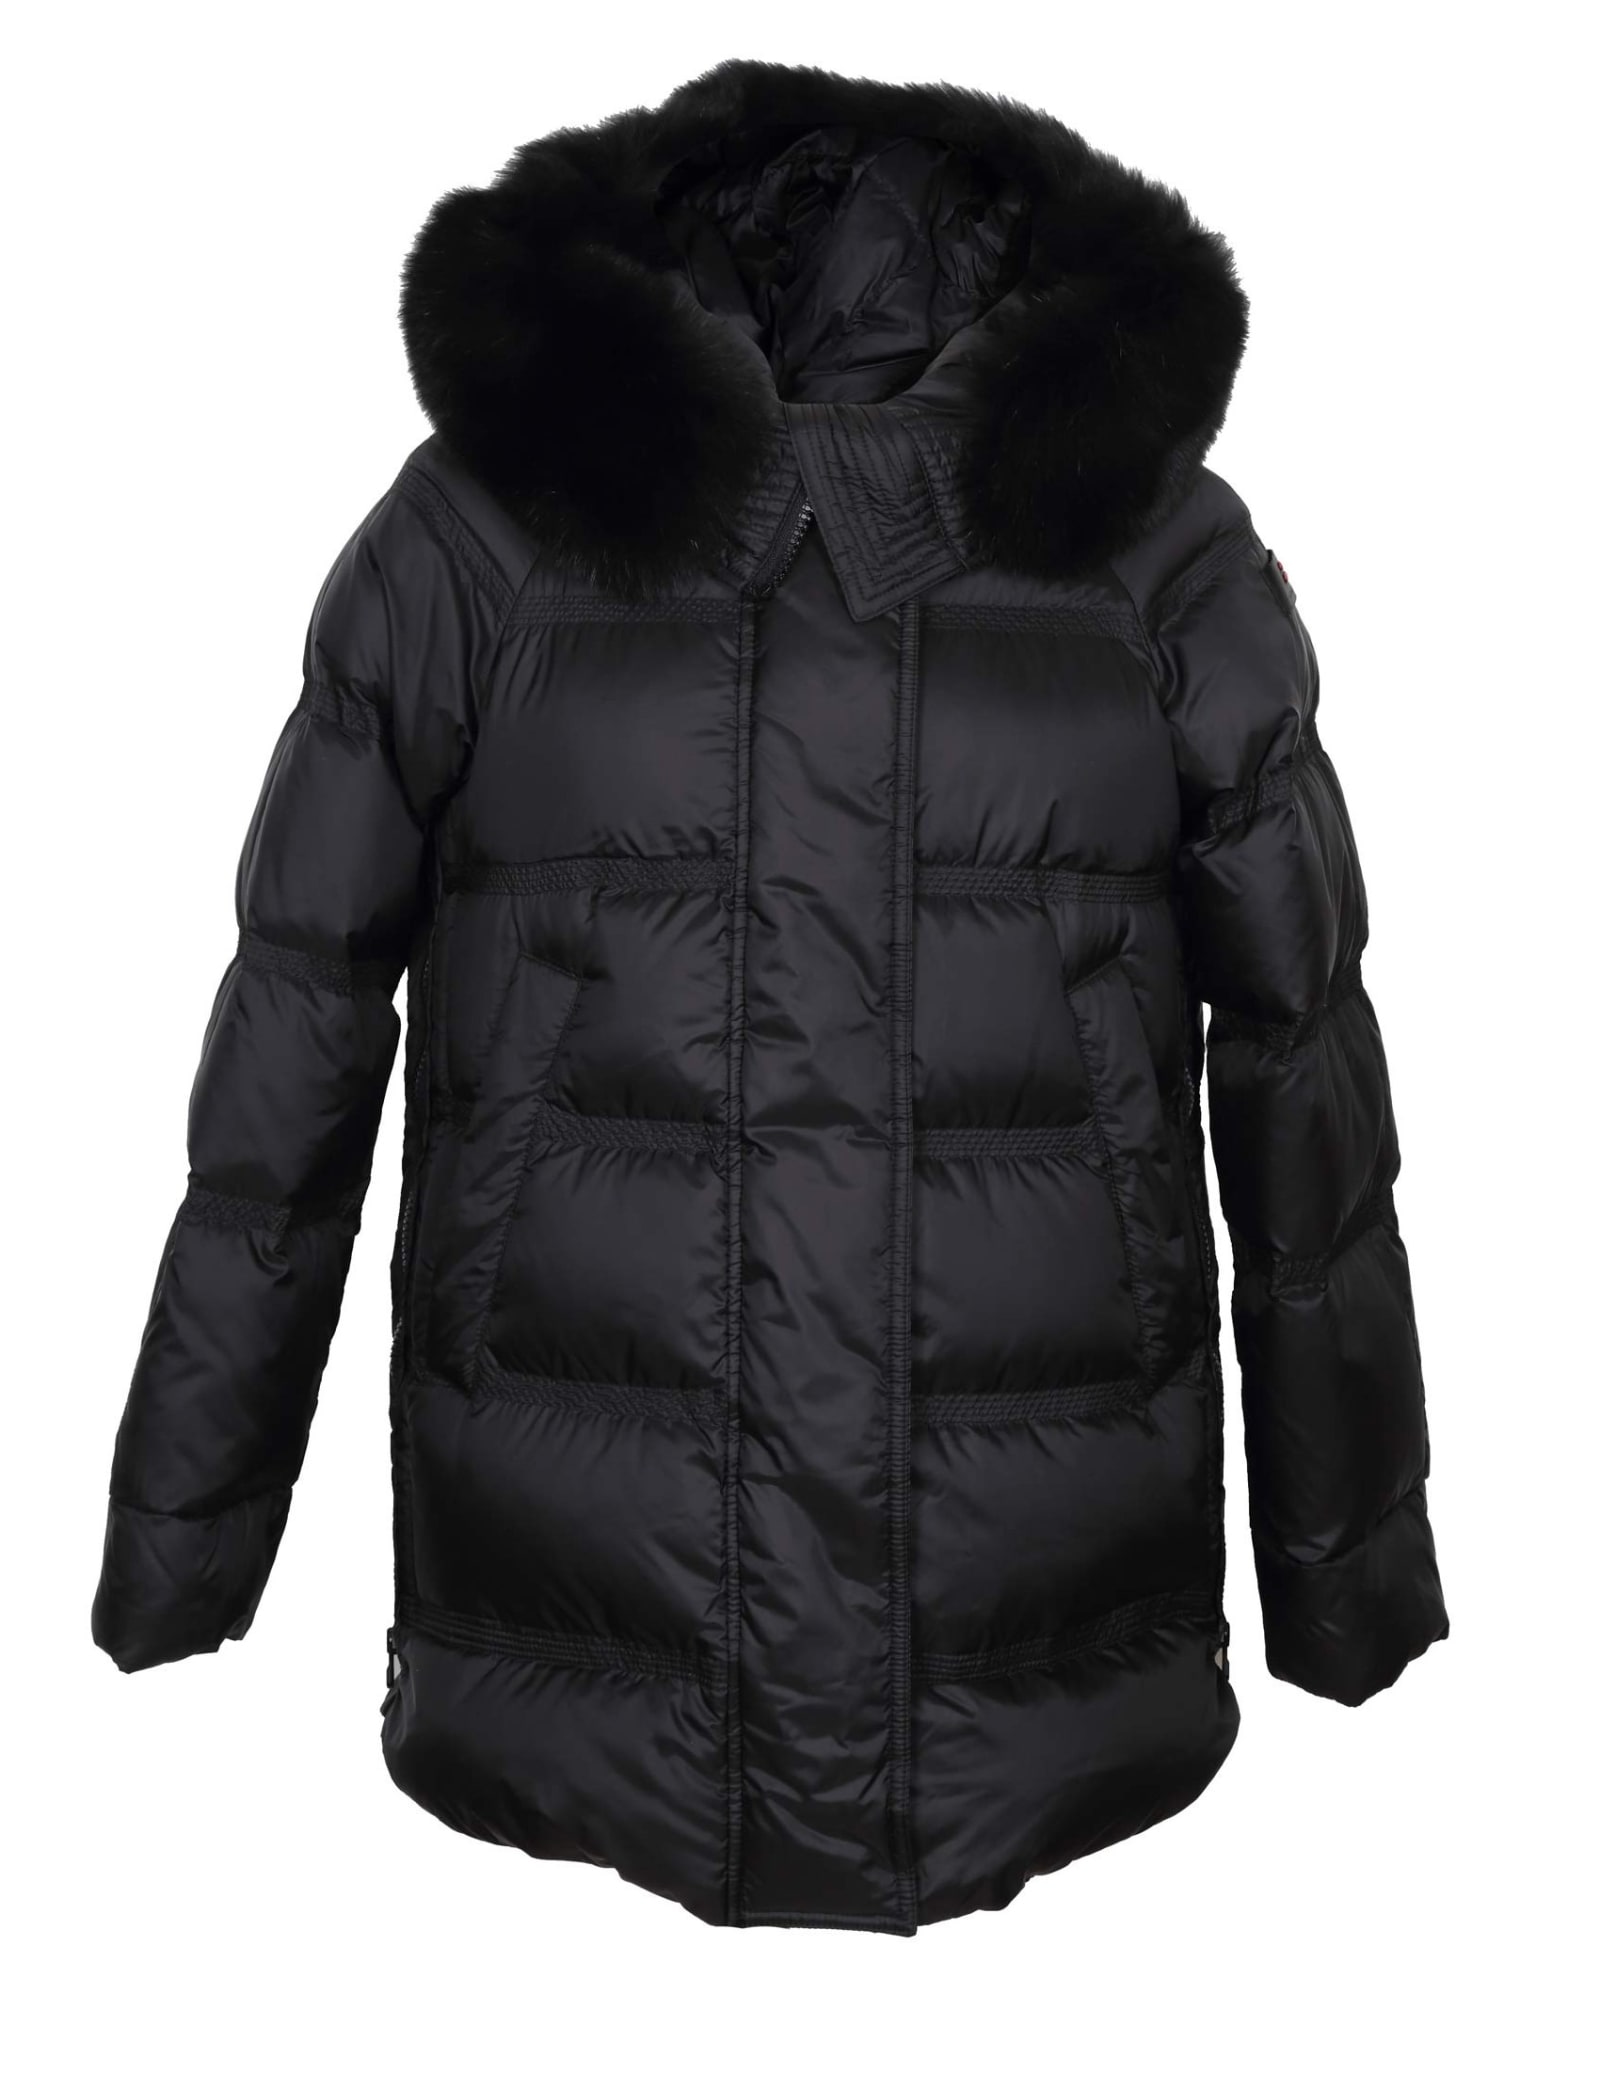 Peuterey Takan Down Jacket Mq 02 Fur Black Color